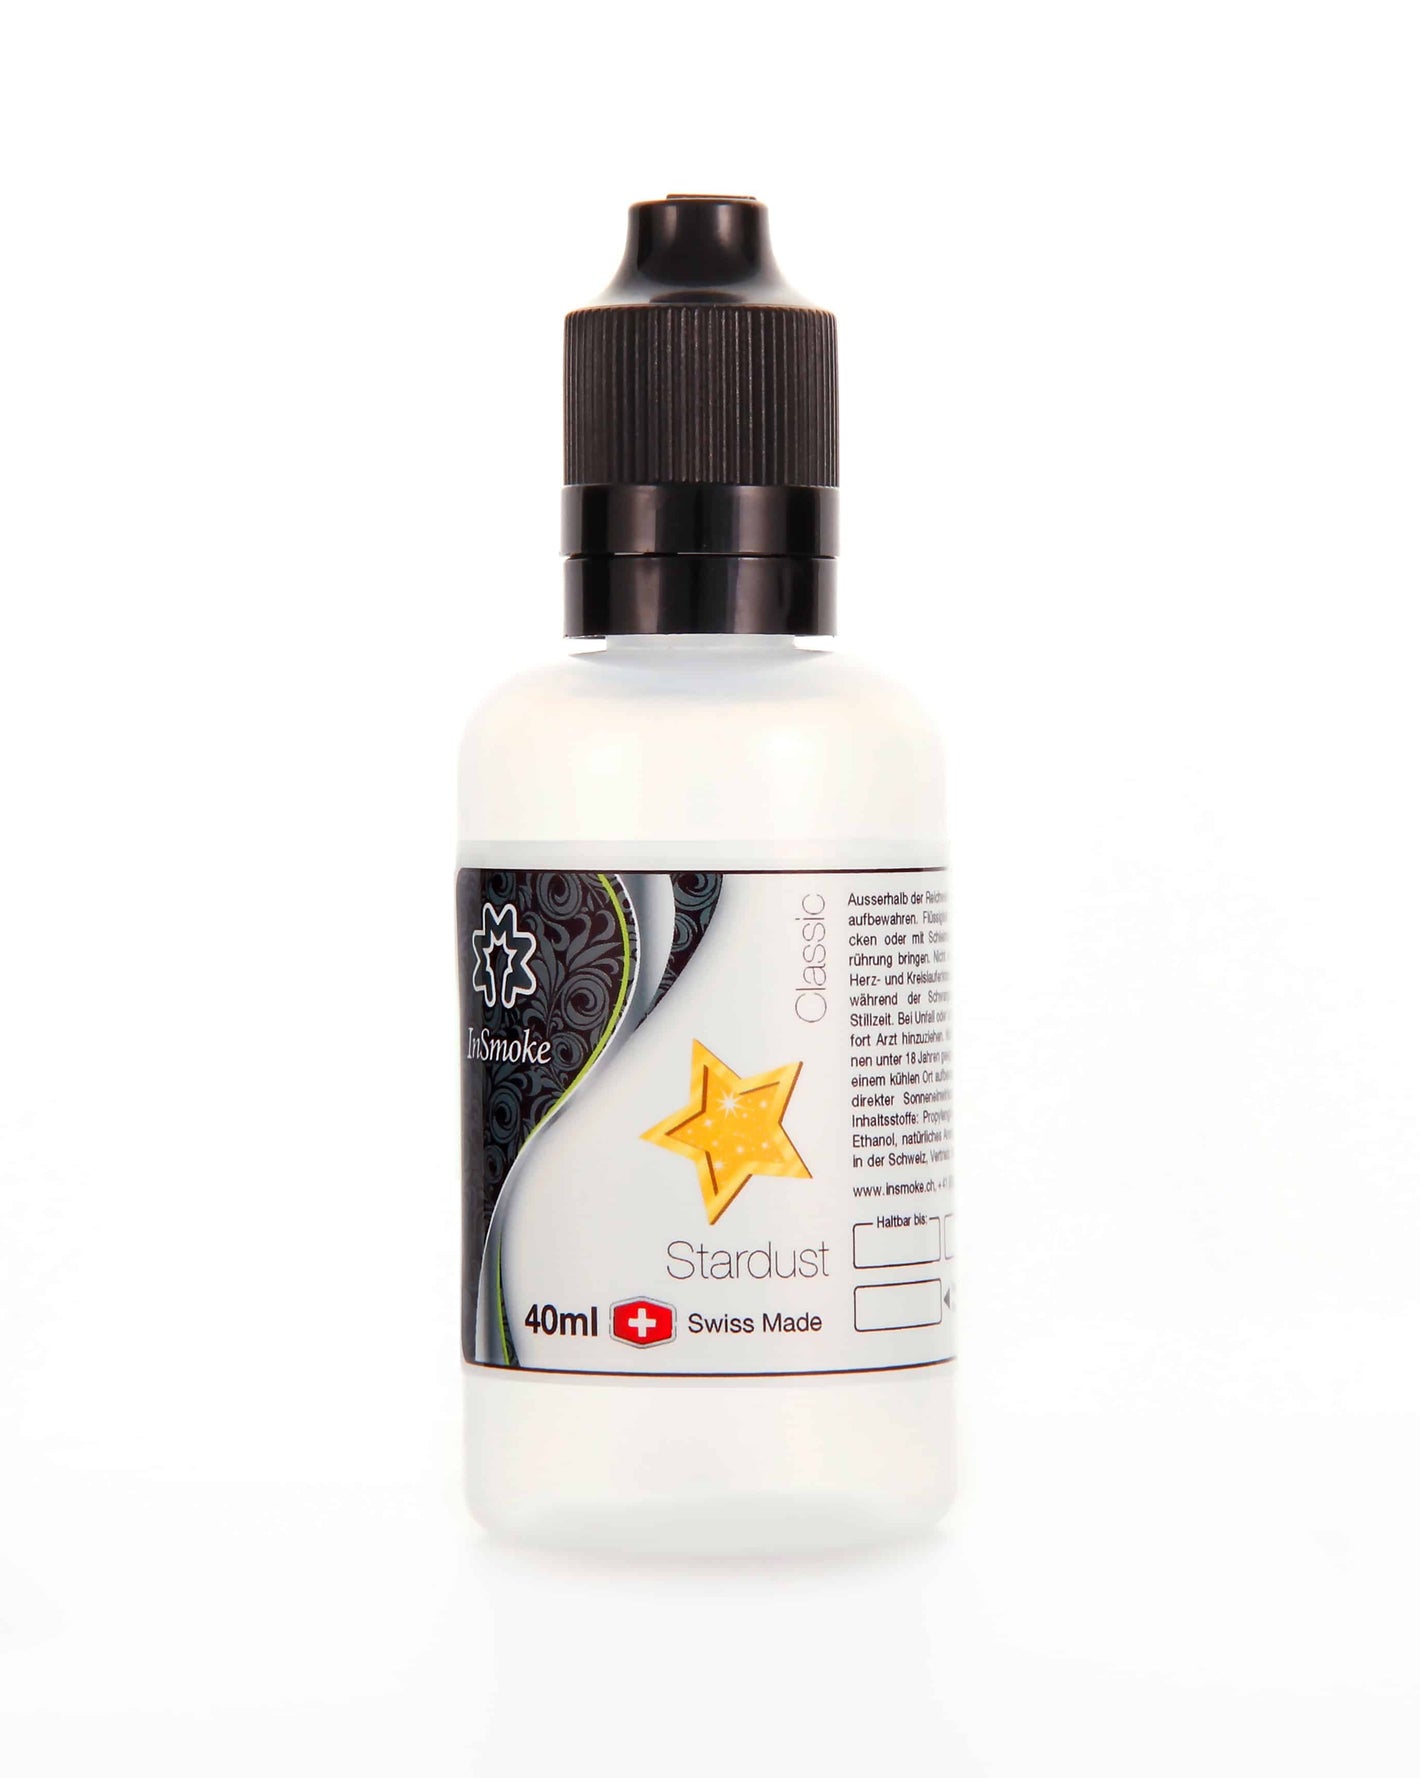 InSmoke Liquid 40 ml Stardust Swiss Made - Dampfpalast - E-Zigarette Online Kaufen